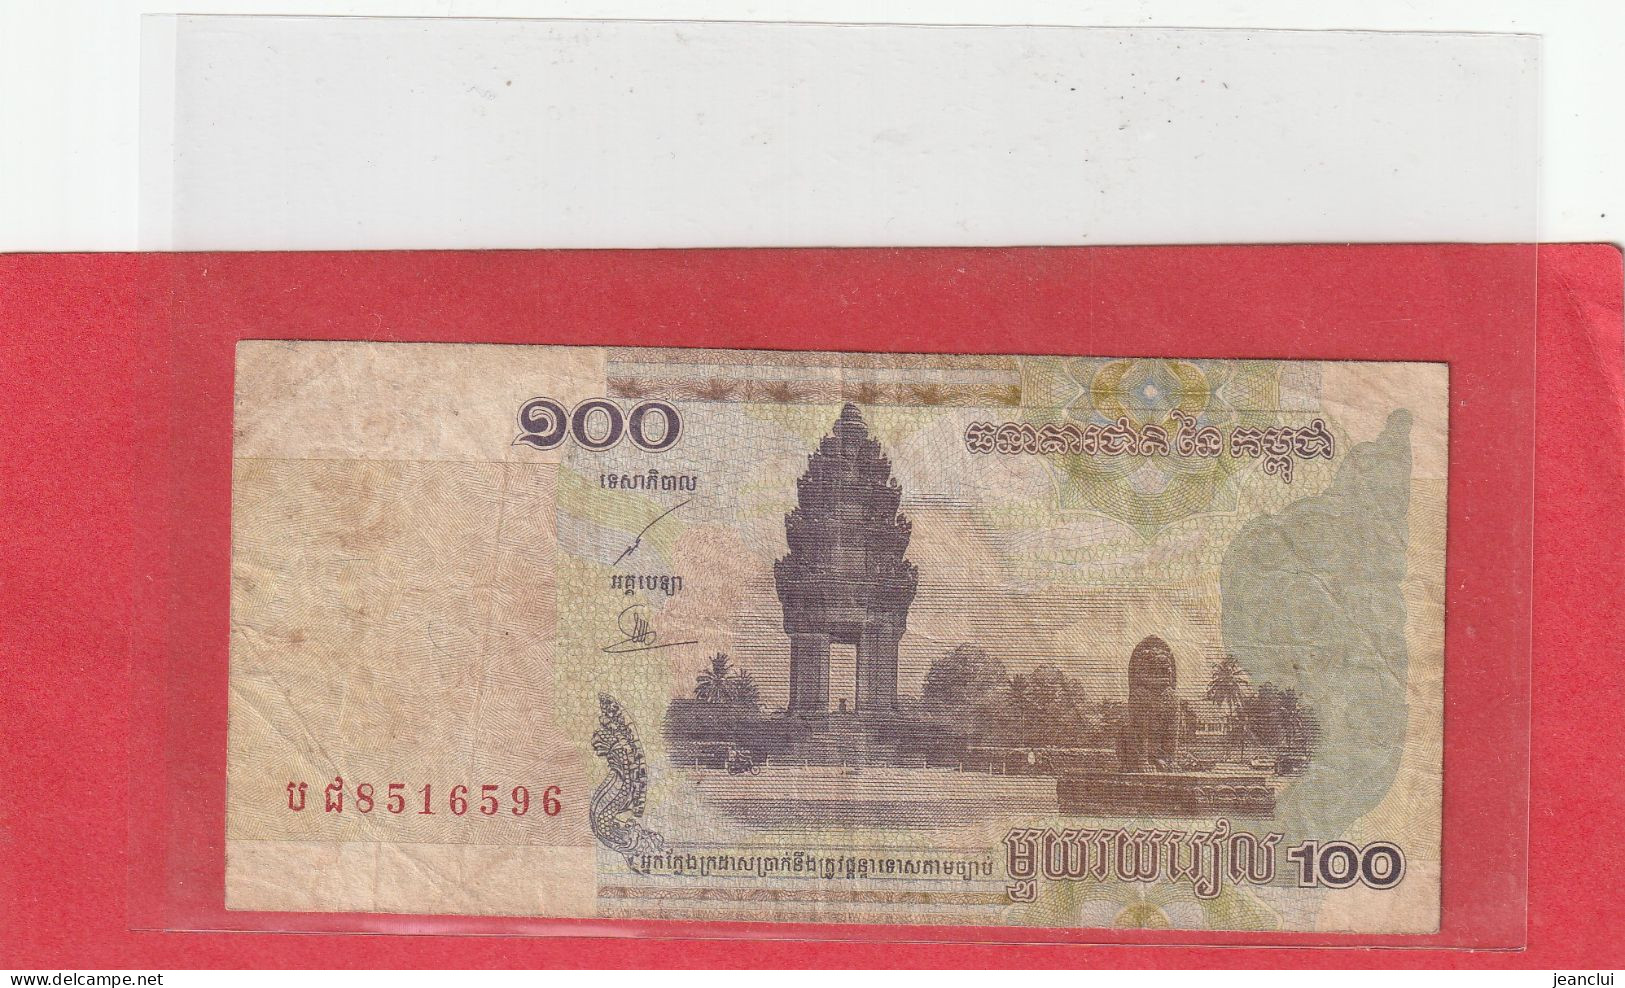 BANQUE NATIONALE DU CAMBODGE  .  100 RIELS  . 2001  . N°  8516596  .  BILLET USITE  .  2 SCANNES - Cambodja